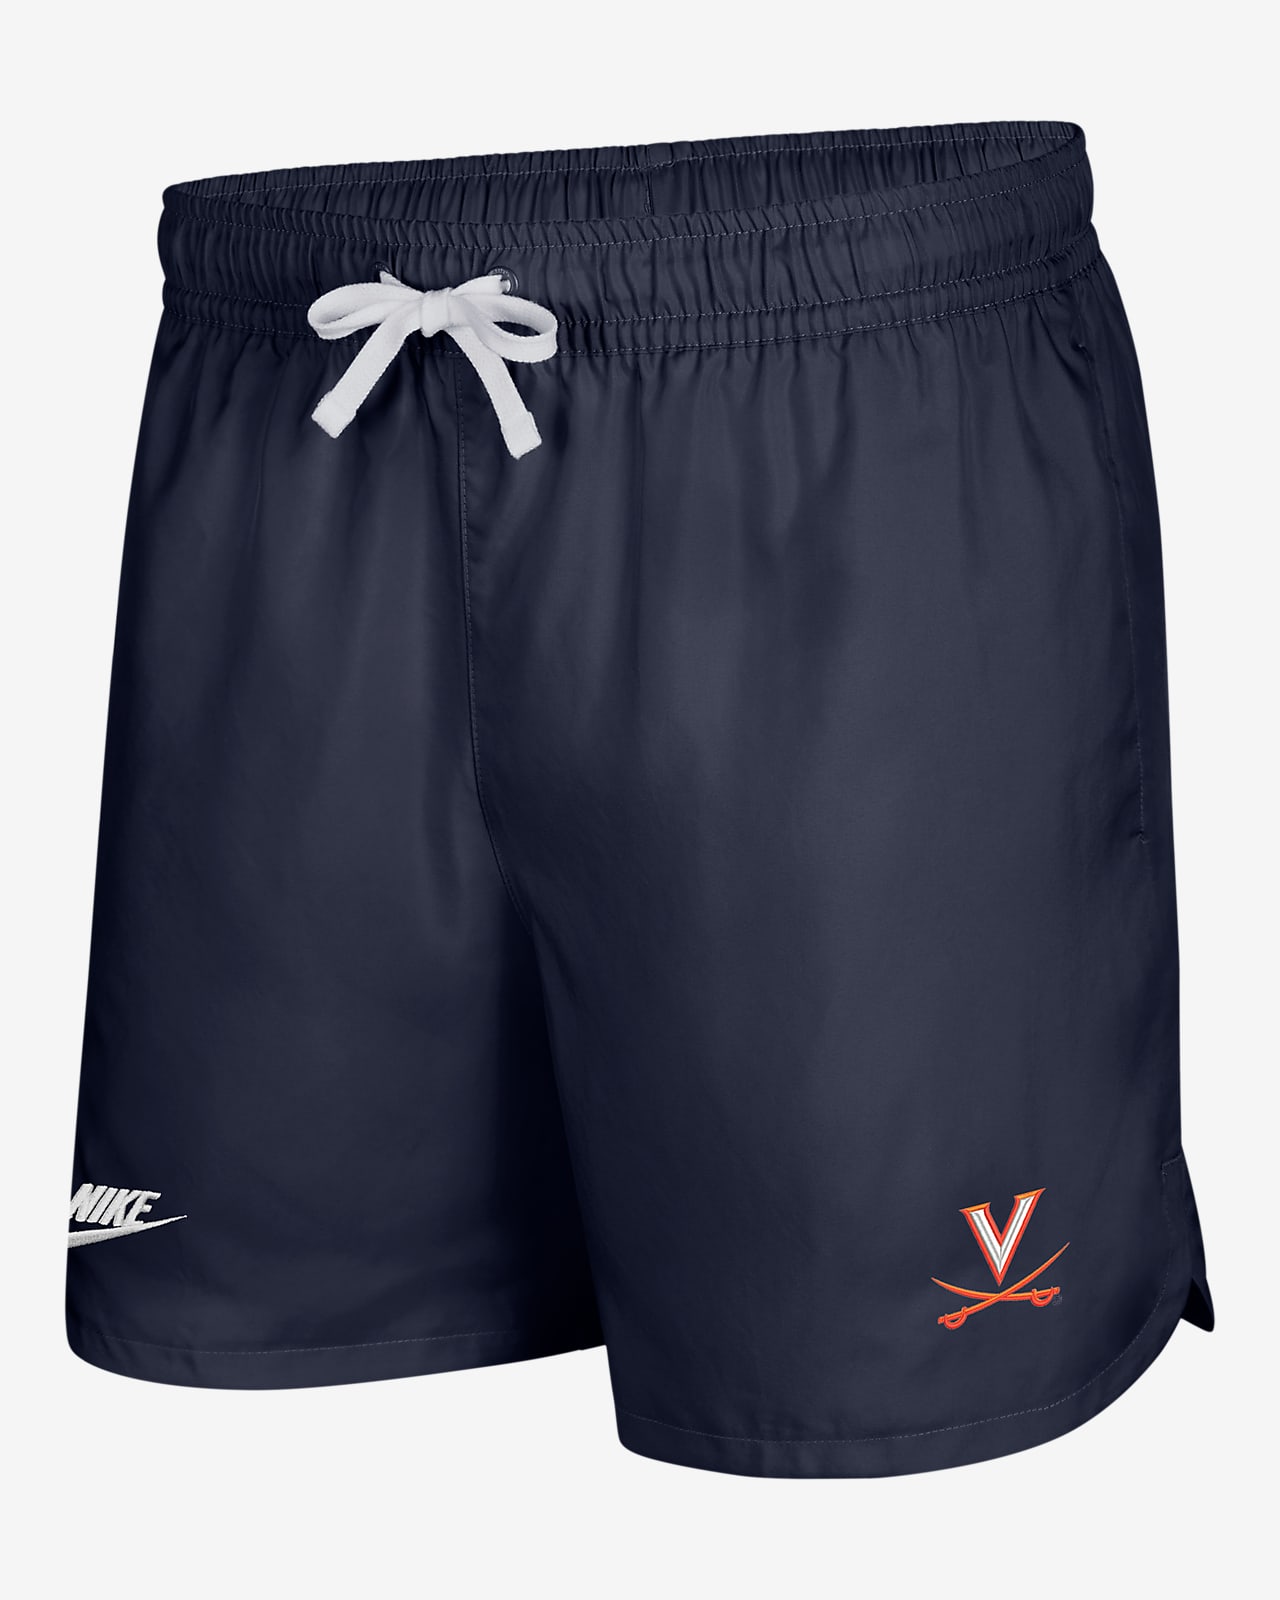 Shorts universitarios Nike Flow para hombre Virginia